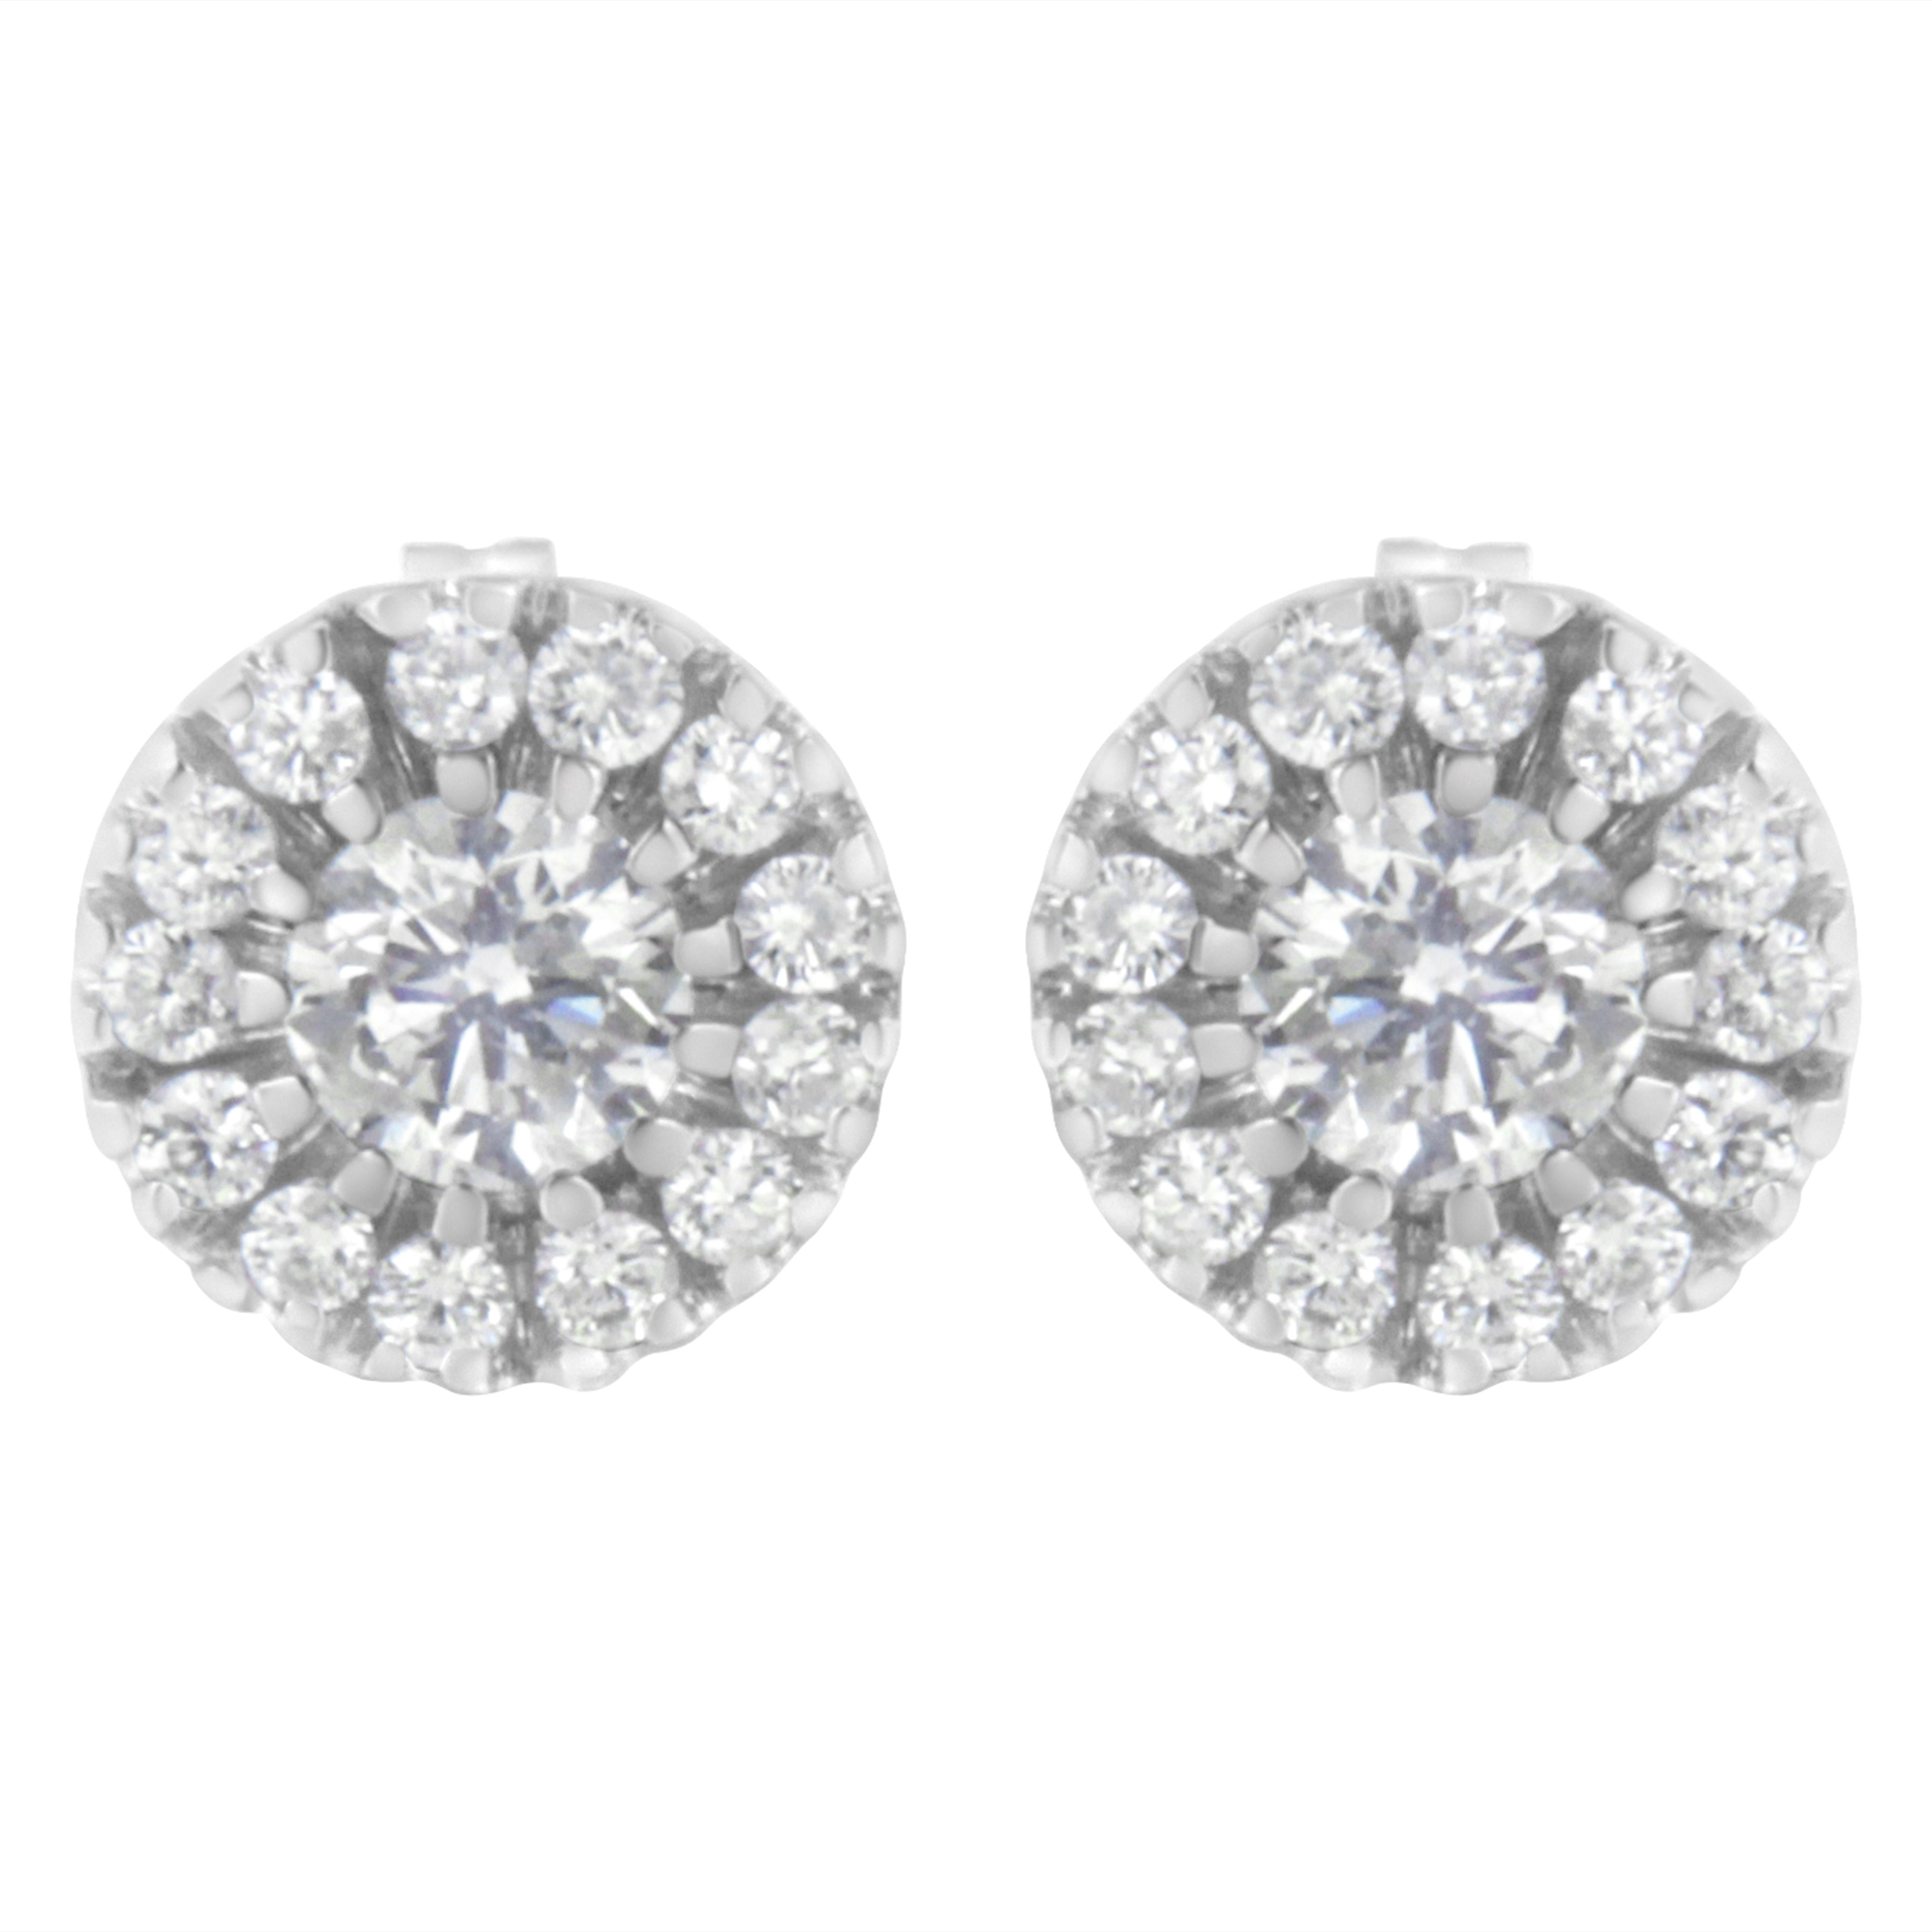 1.0 carat diamond earrings